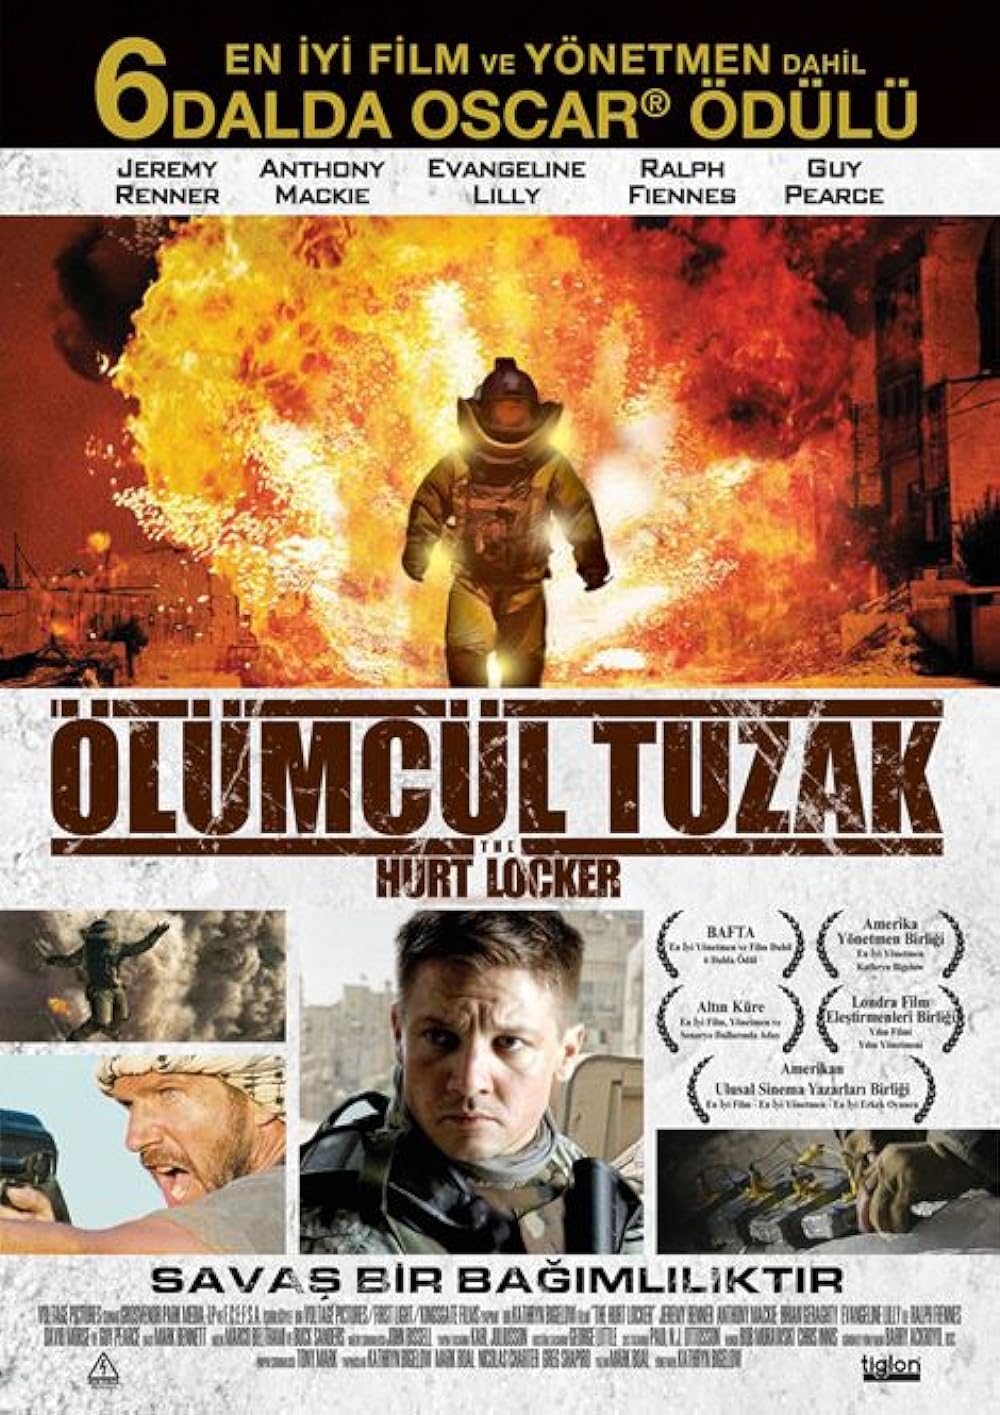 The Hurt Locker (2008) 192Kbps 23.976Fps 48Khz 2.0Ch DigitalTV Turkish Audio TAC